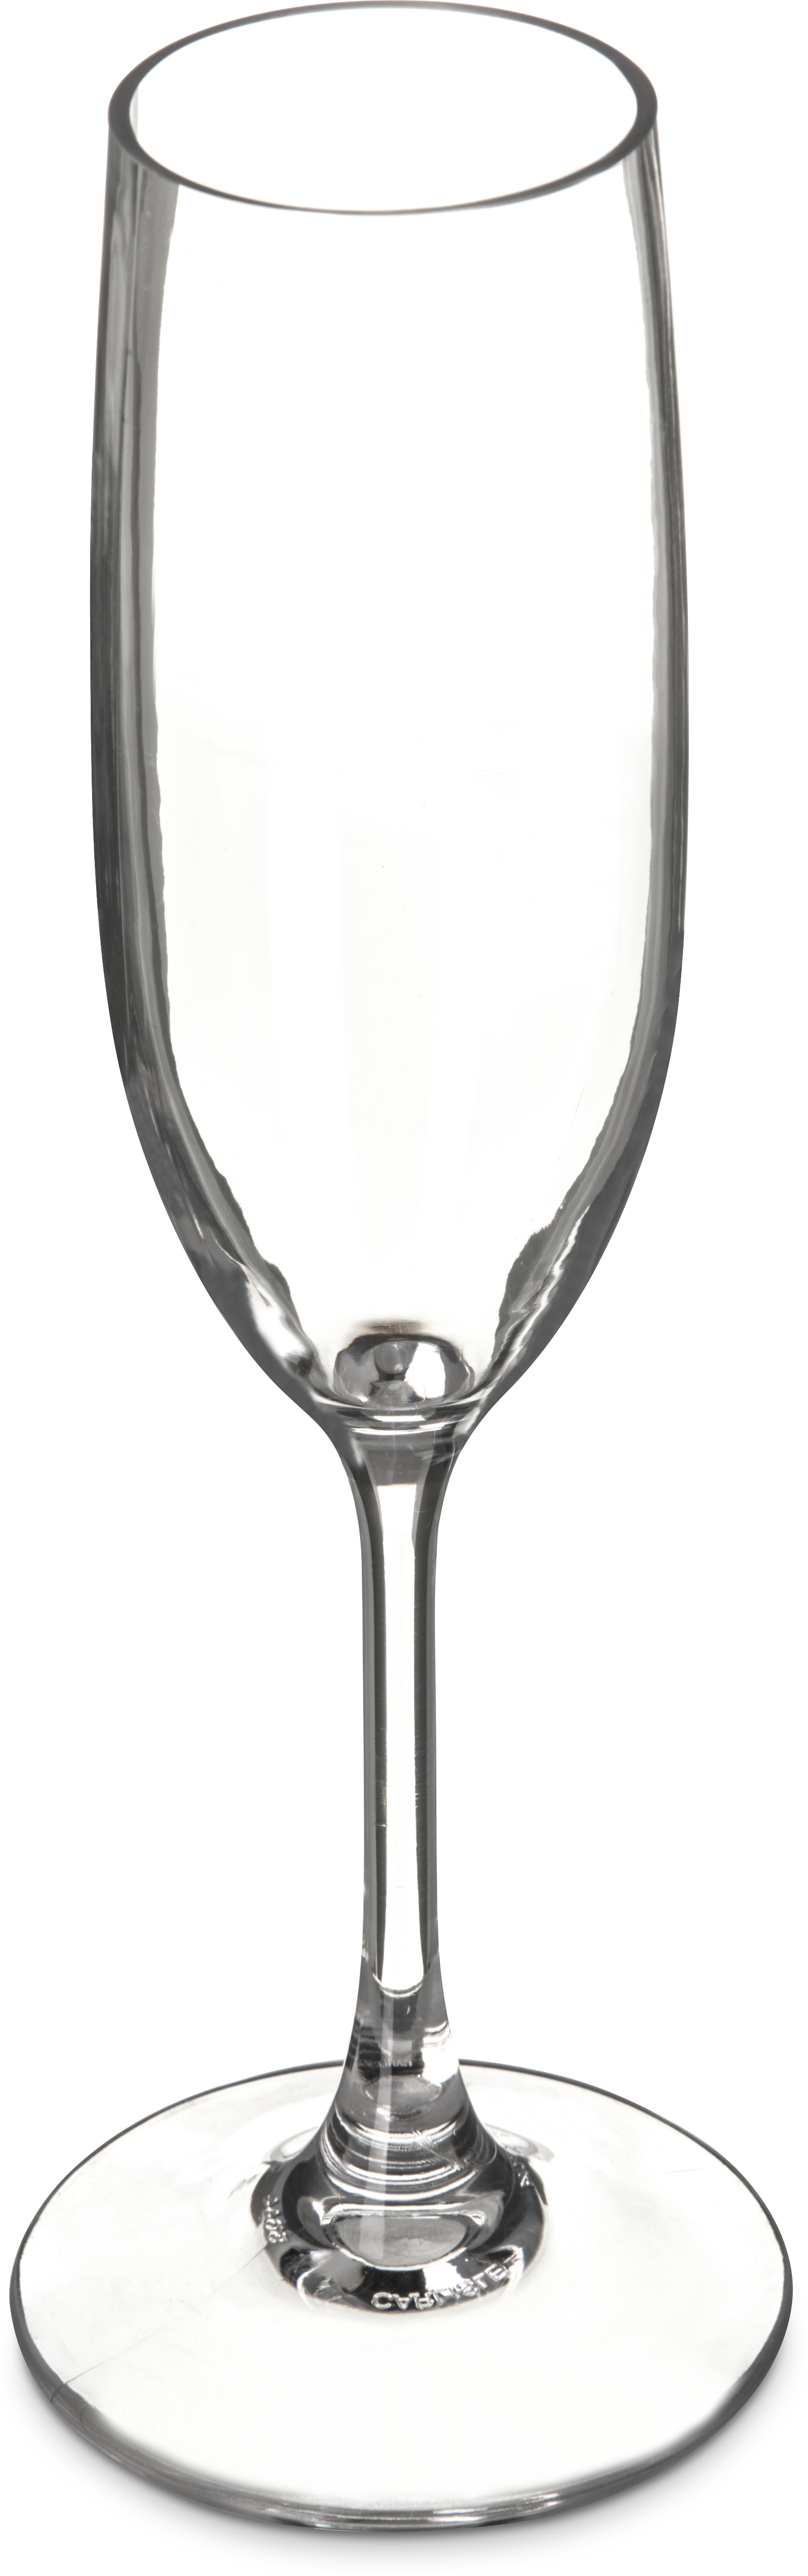 Alibi Champagne Flute 6 oz - Clear